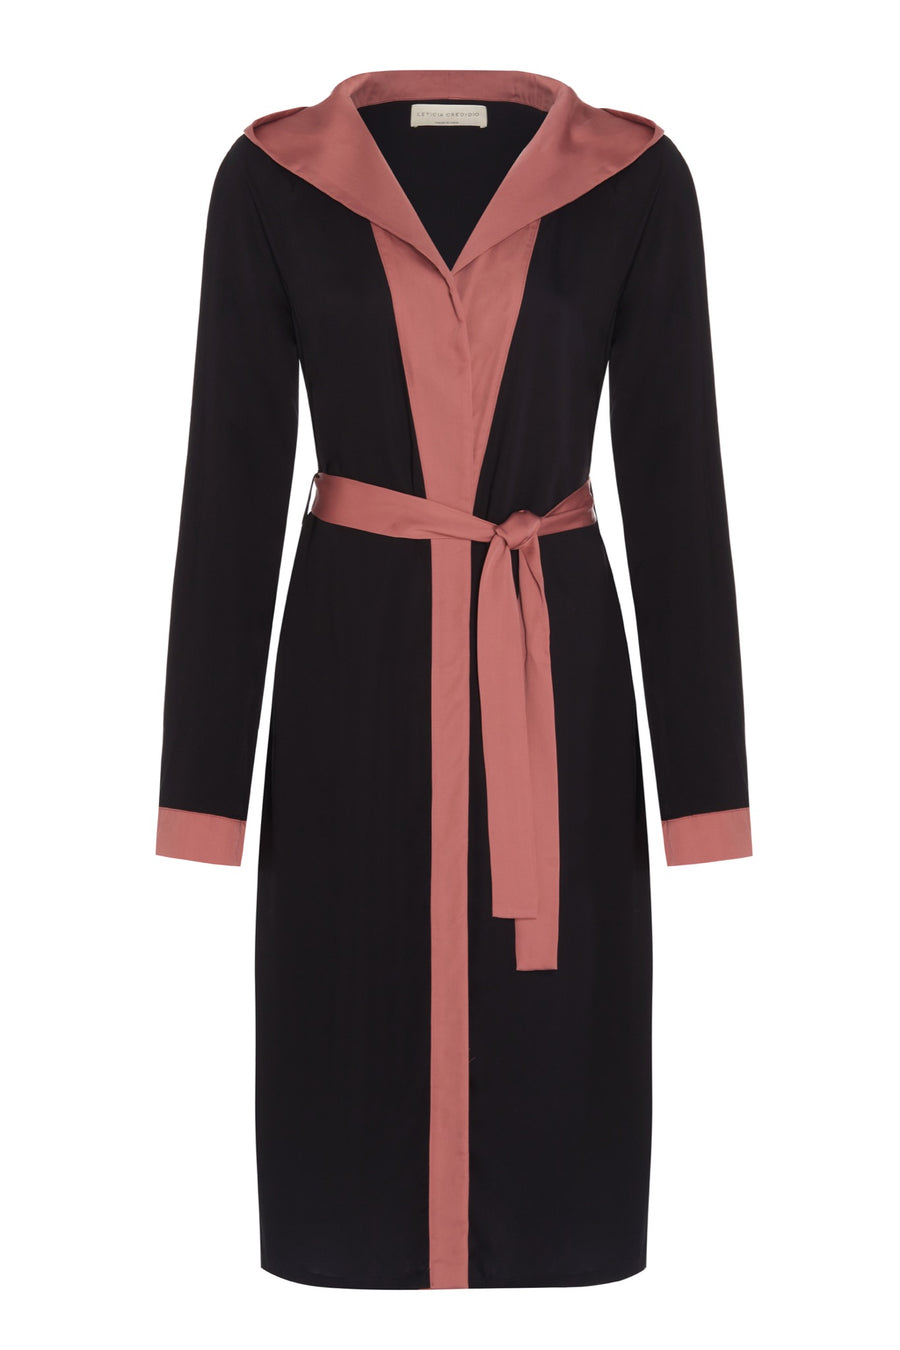 Women's loungewear - Black and pink vegan silk nightgown